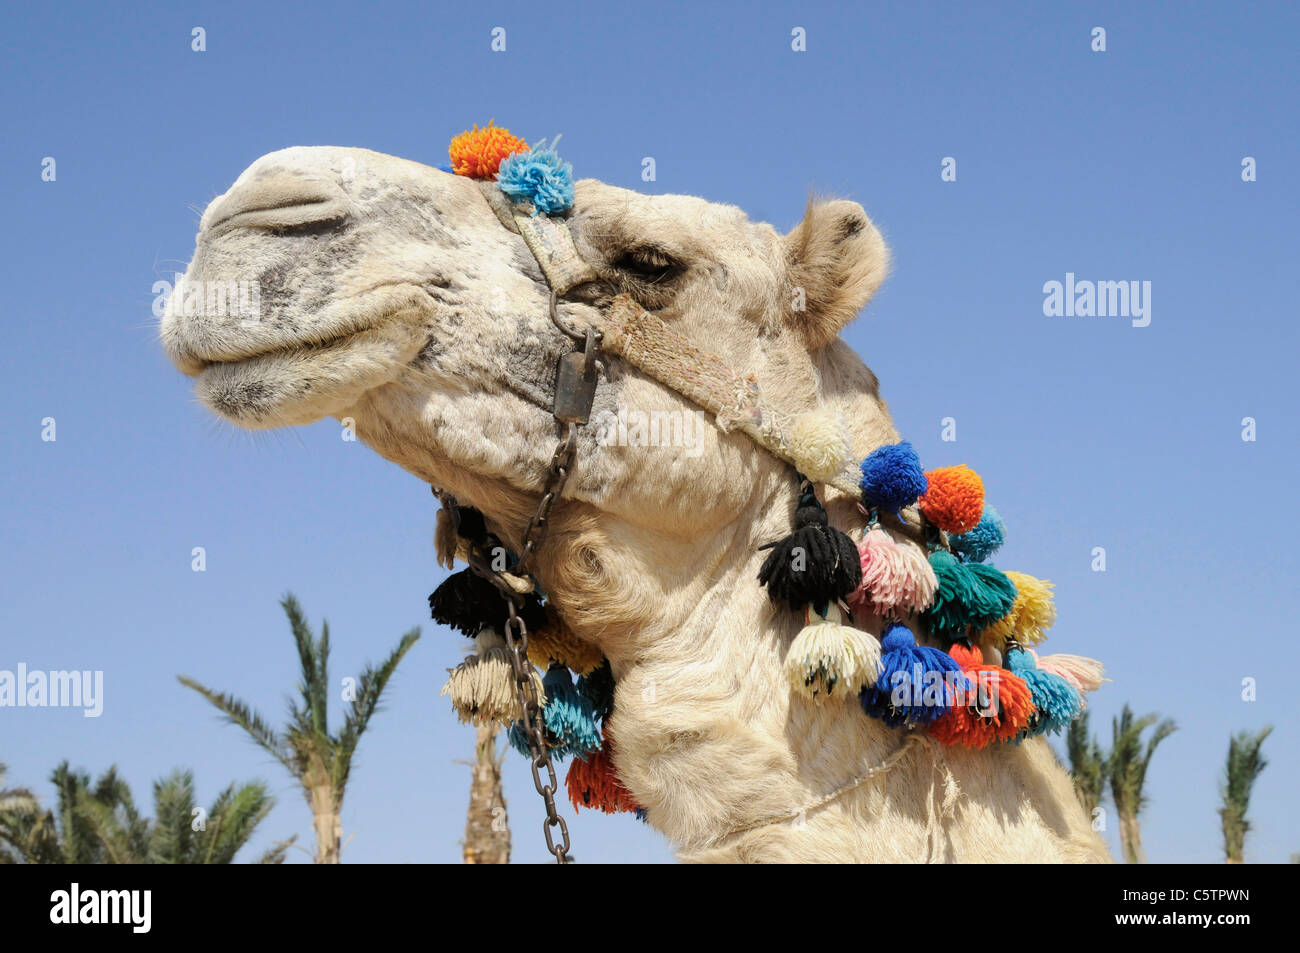 Egypt, Portrait of Camel In Full Head Dress, (Camelus dromedarius) Stock Photo